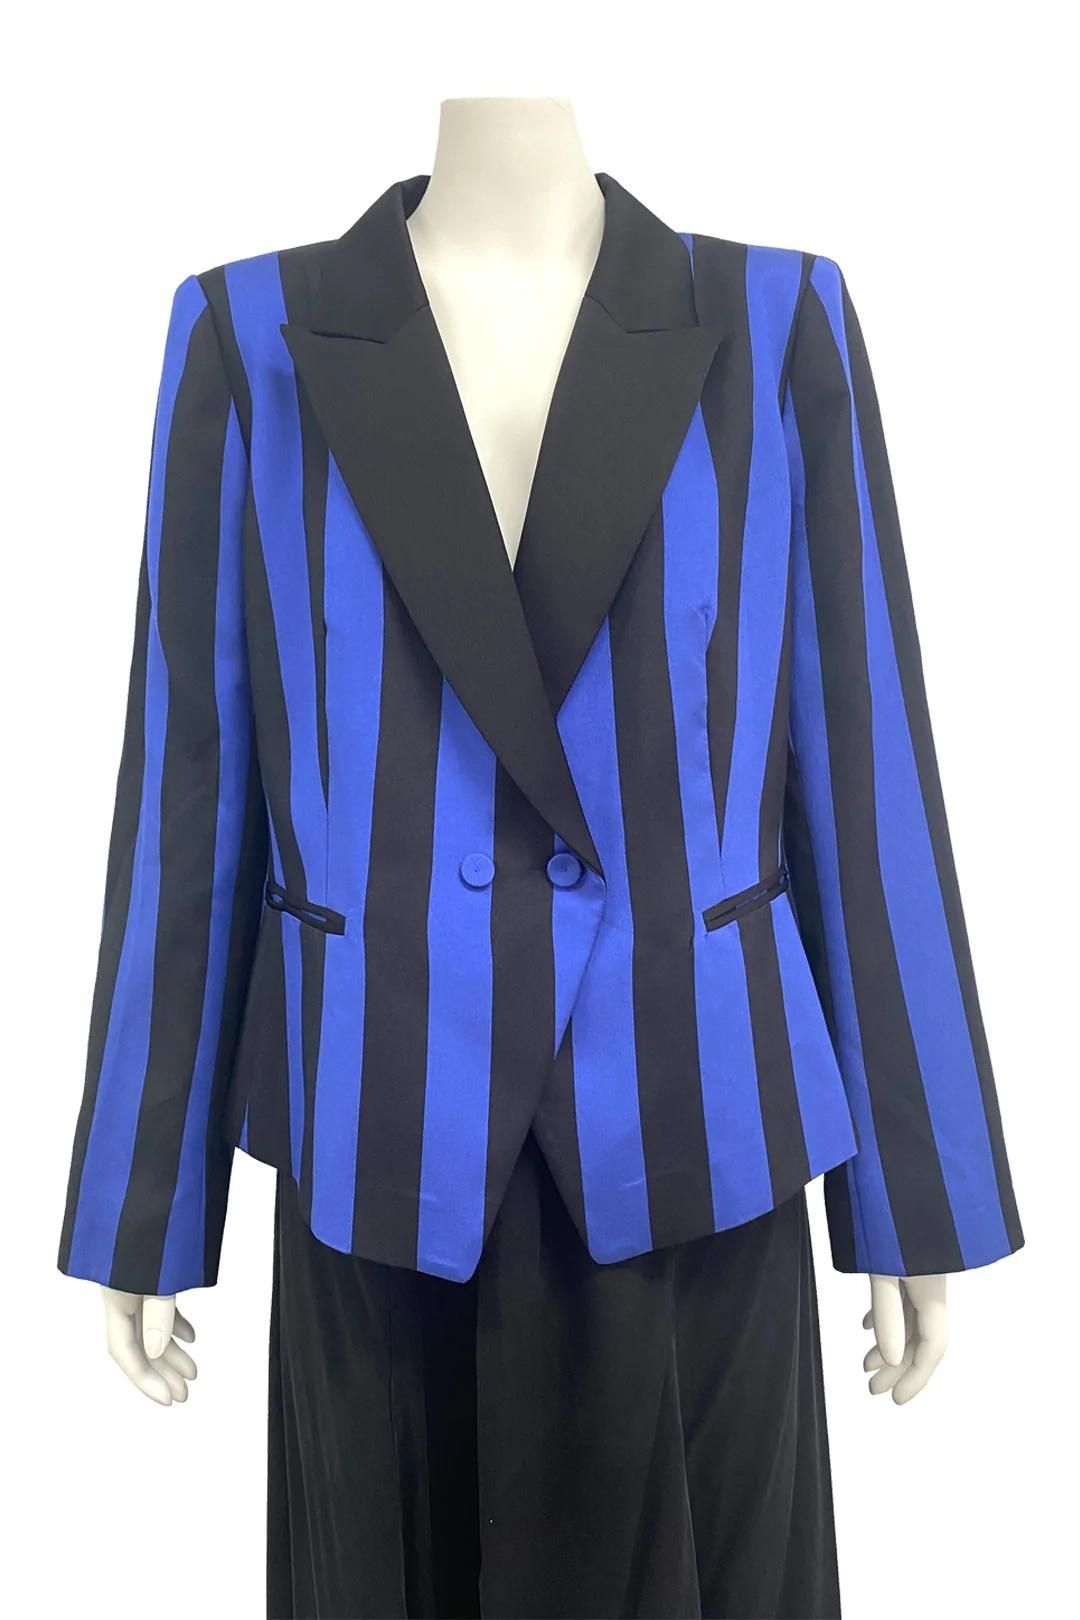 Carla Zampatti - Evening Striped Tailored Jacket